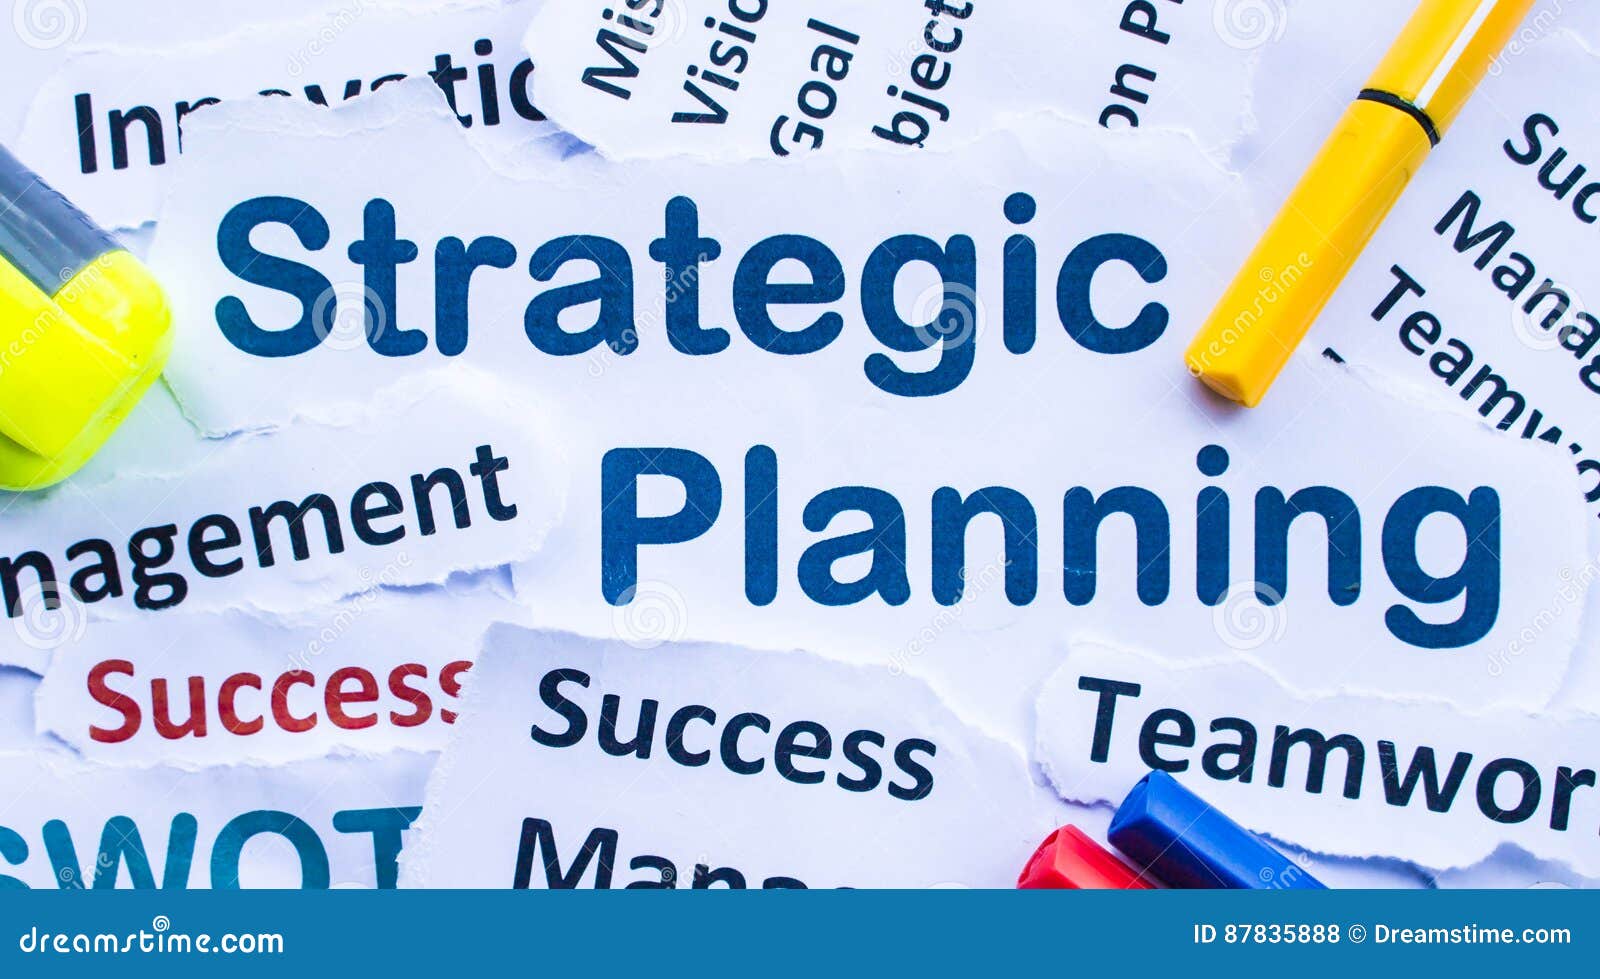 strategic planning banner